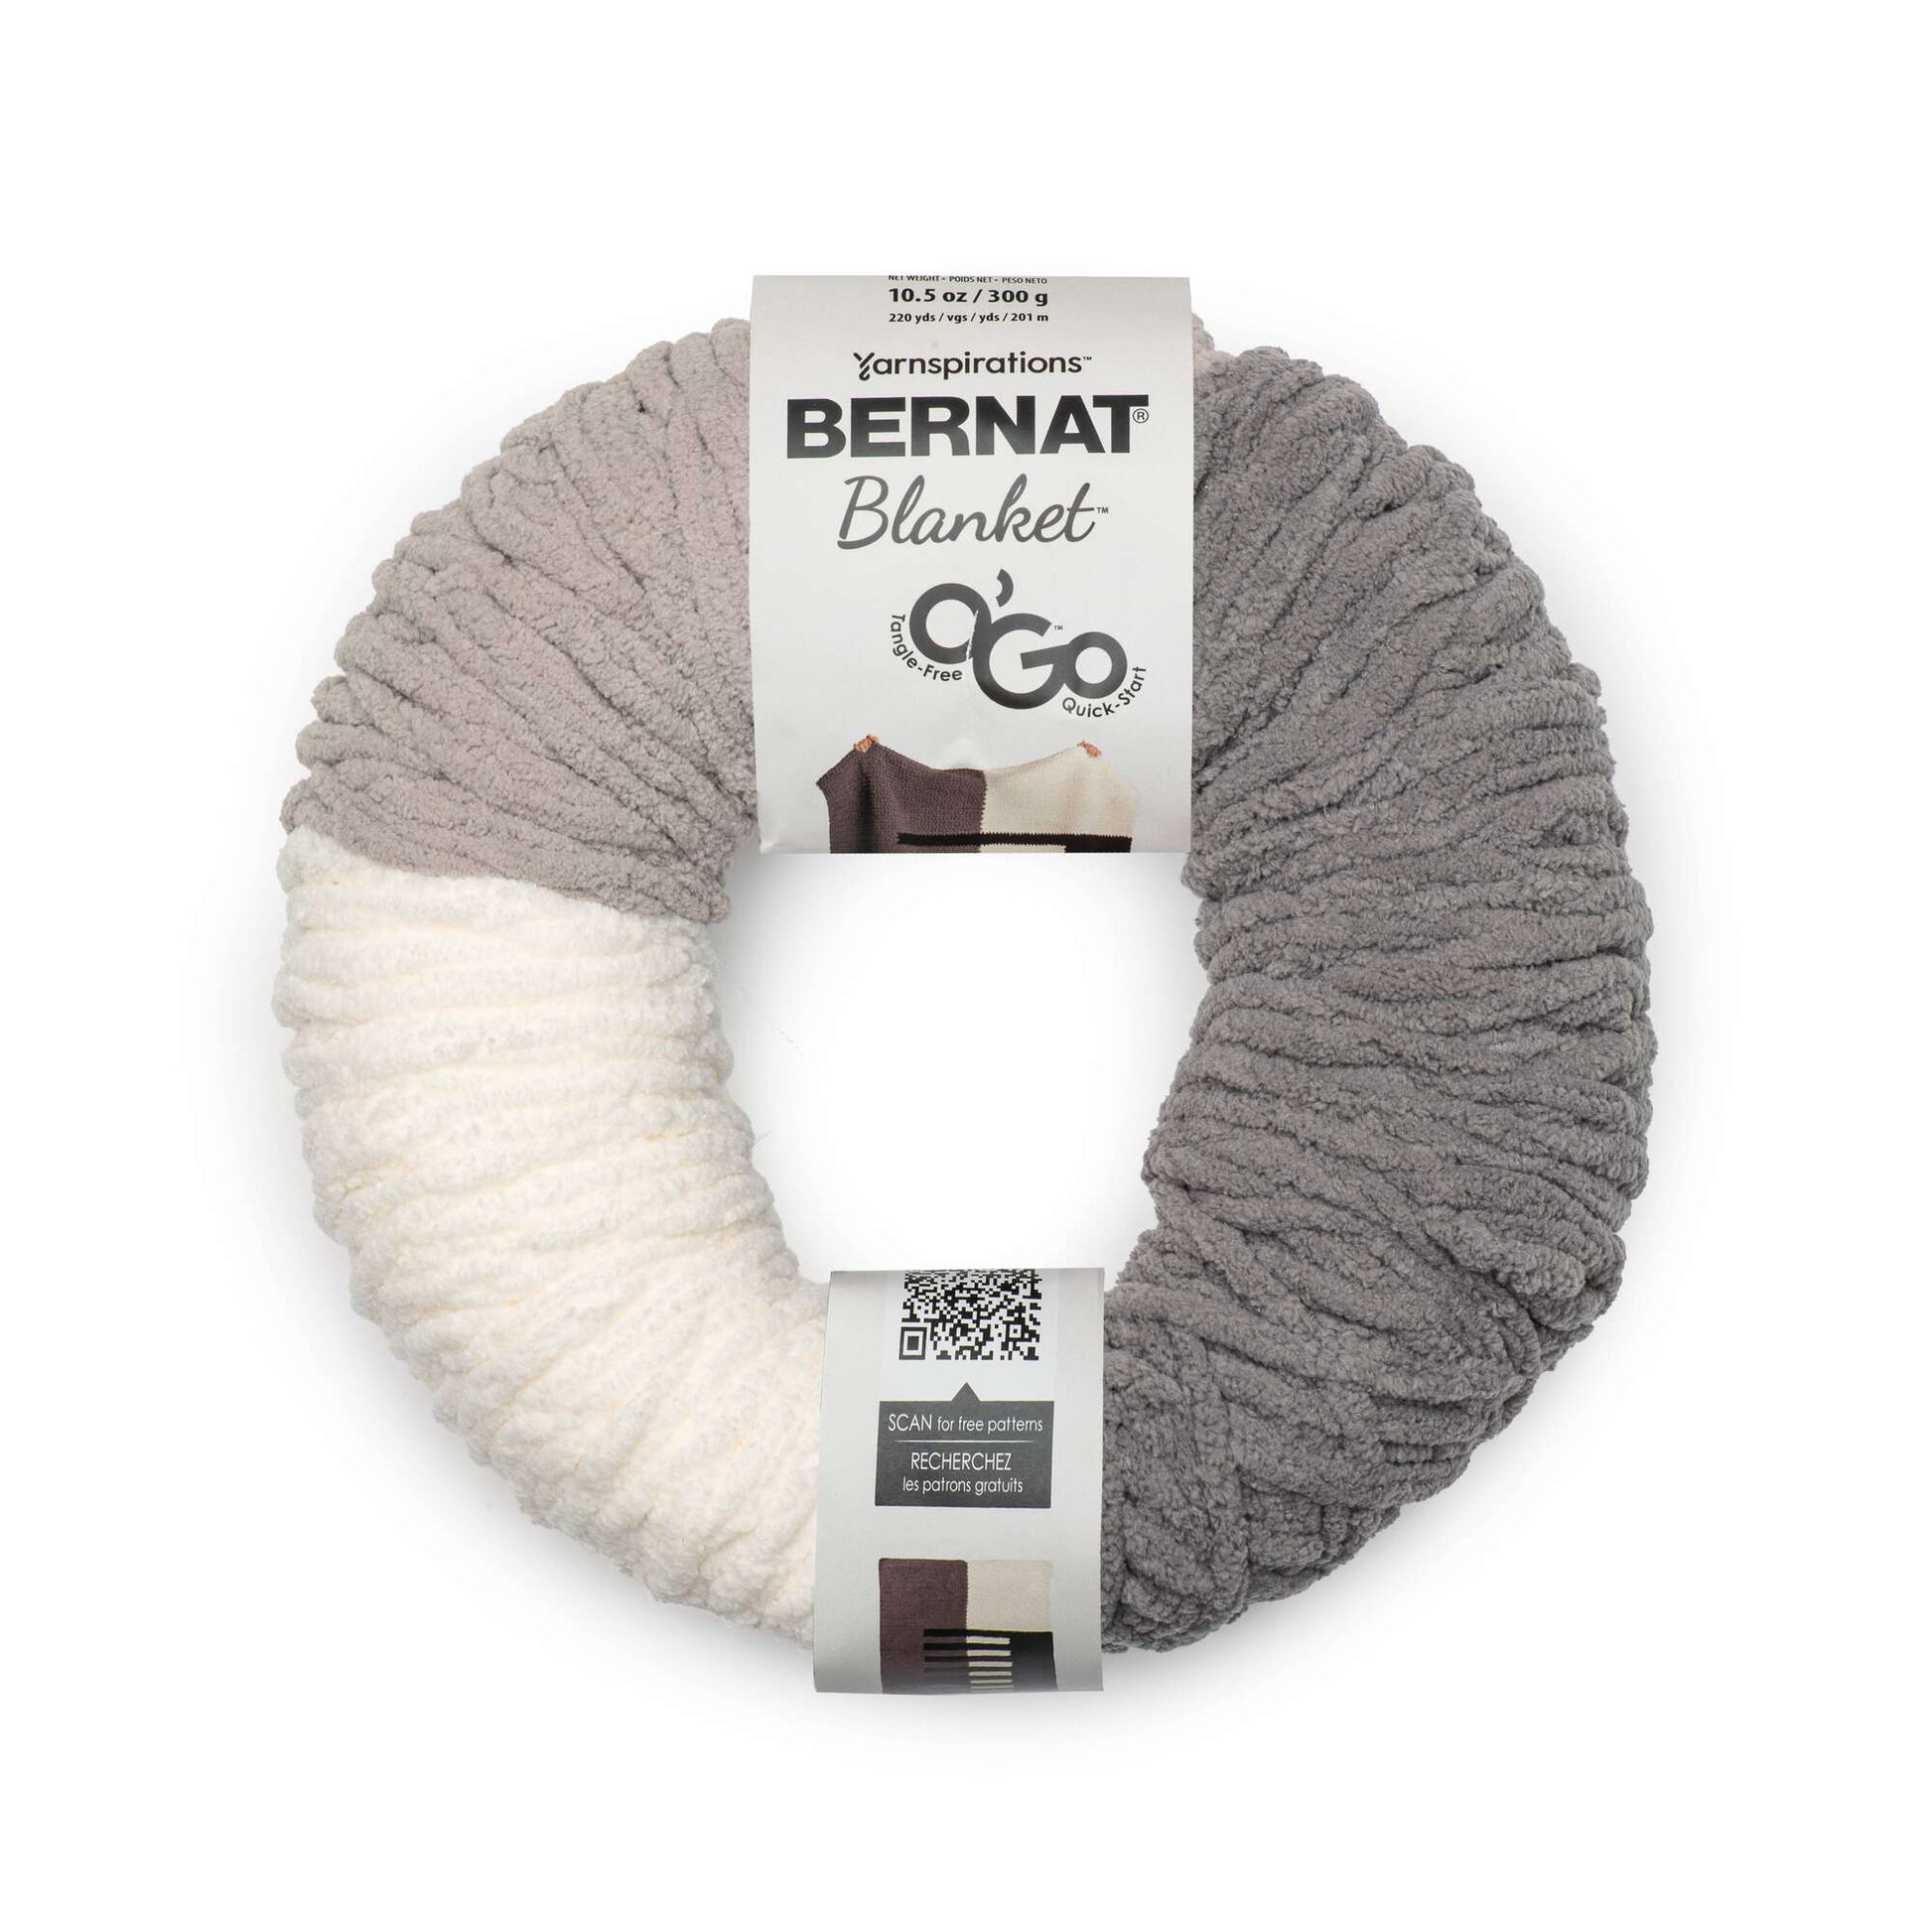 Bernat Blanket O'Go Yarn (300g/10.5oz) - Clearance Shades* Hibernate